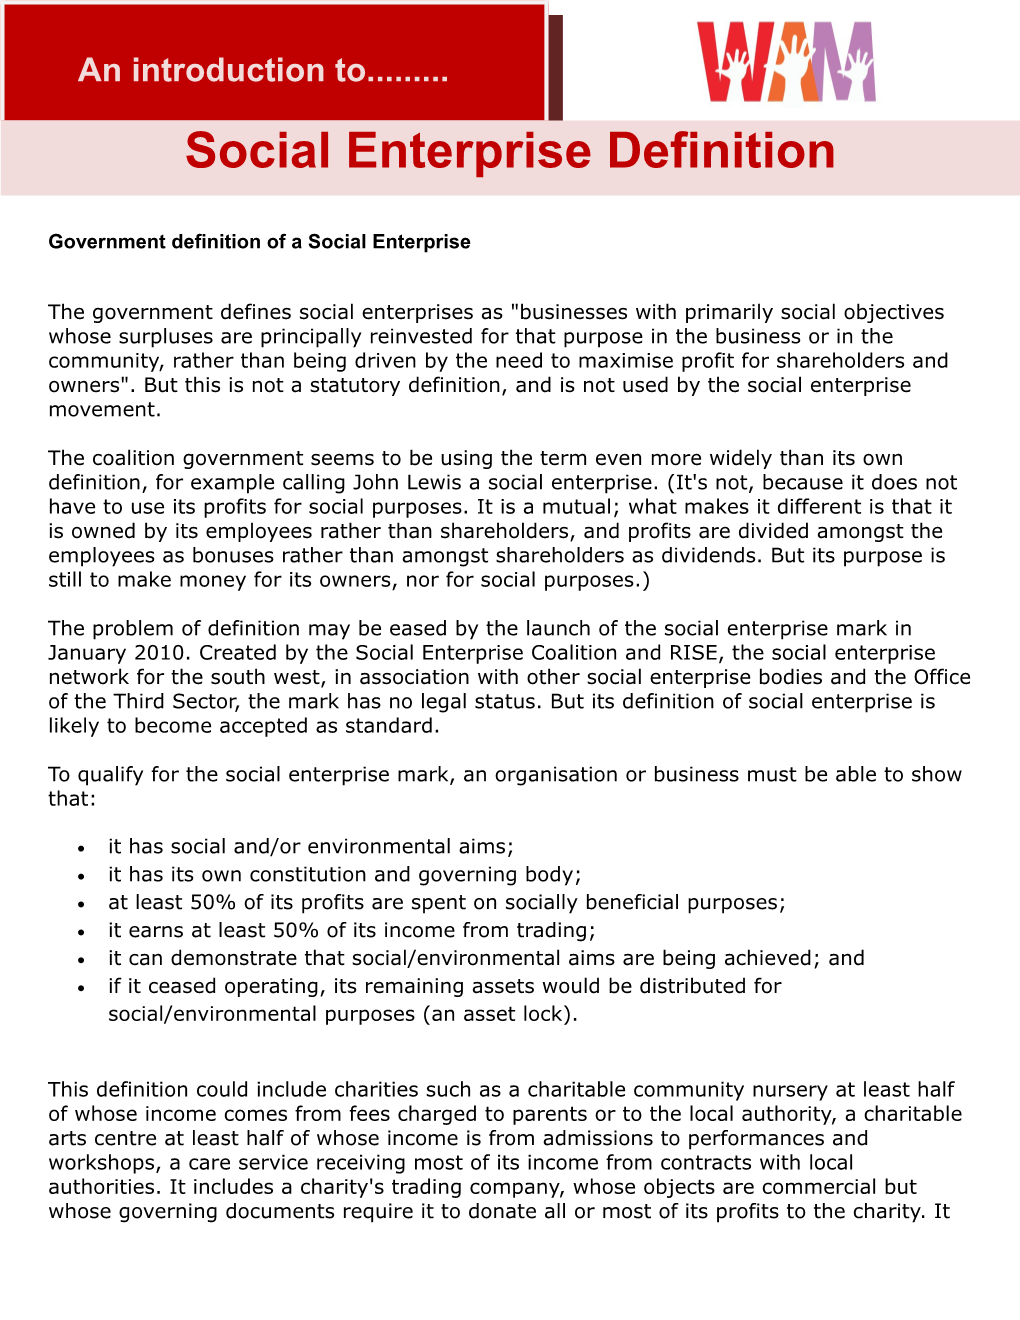 Government Definition of a Social Enterprise